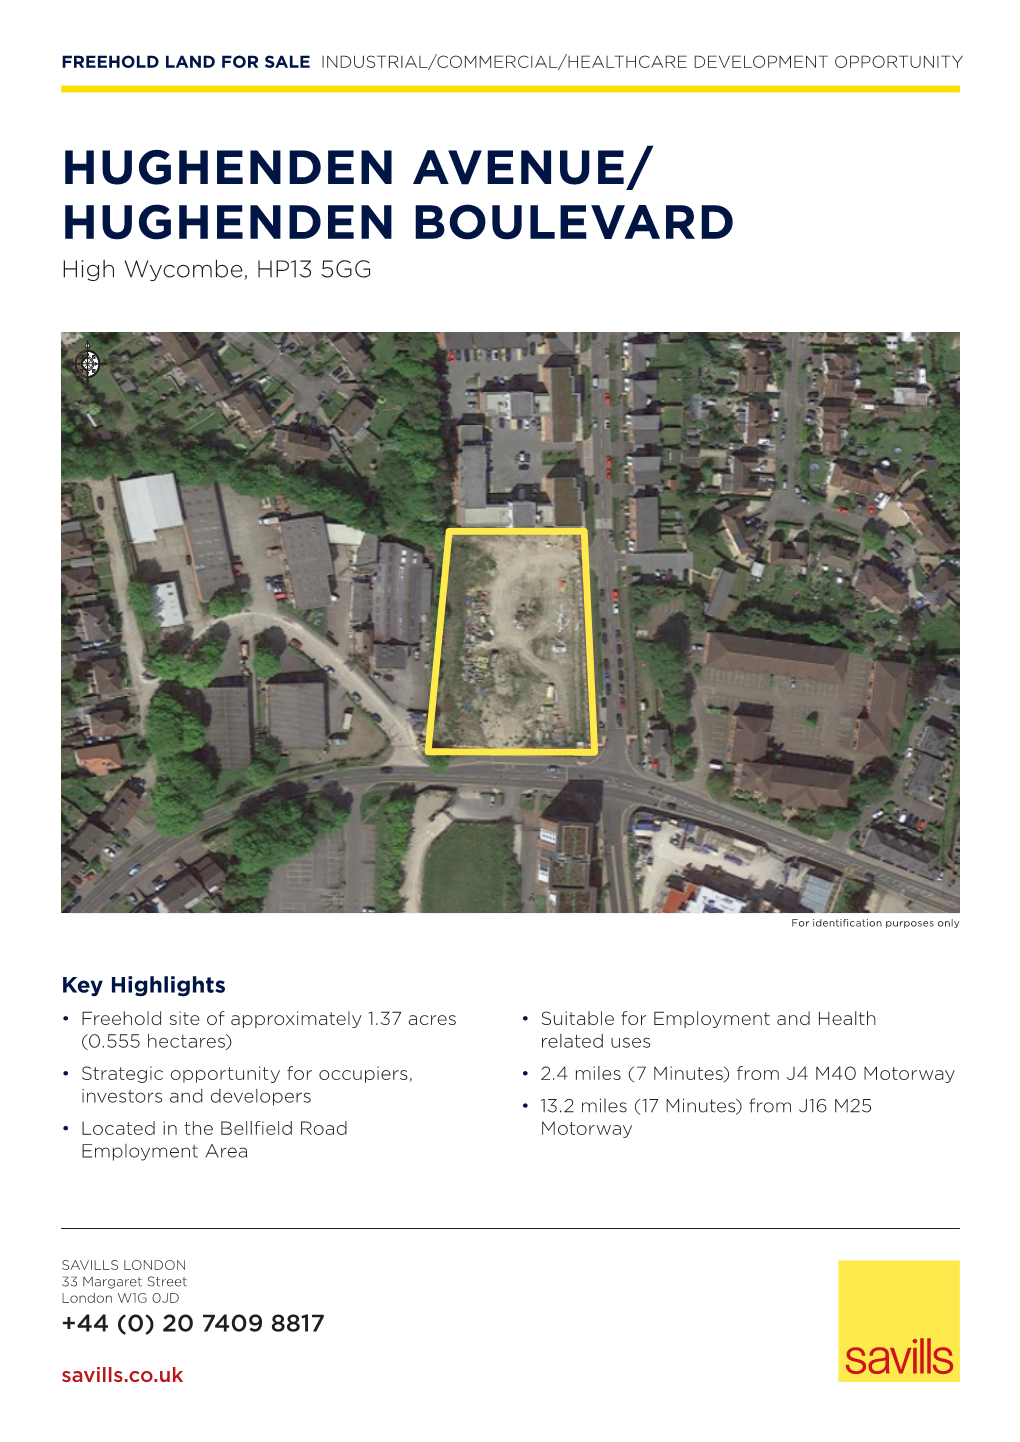 HUGHENDEN AVENUE/ HUGHENDEN BOULEVARD High Wycombe, HP13 5GG